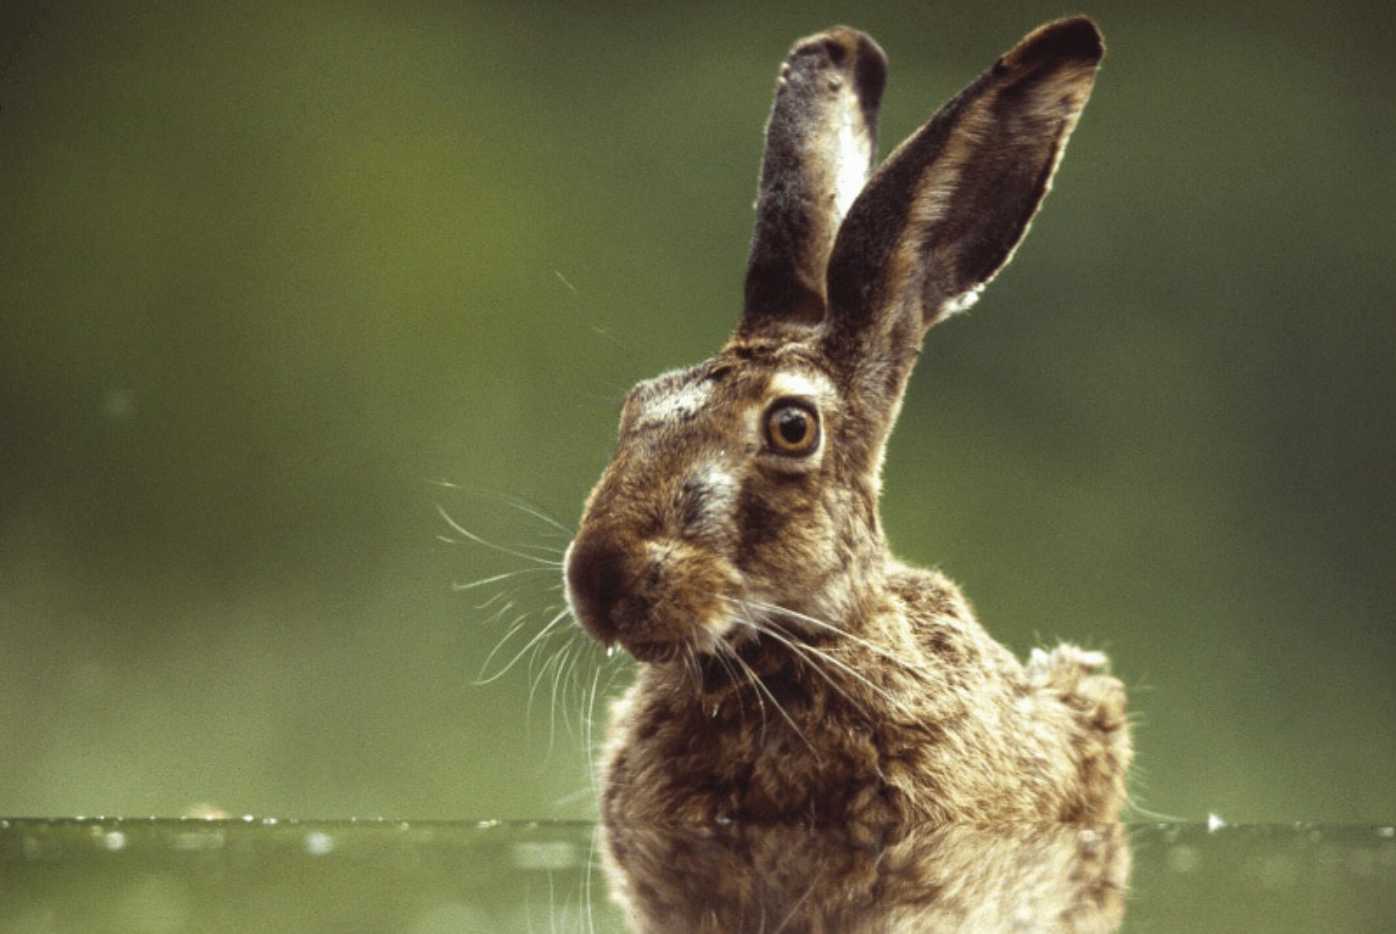 can rabbits swim